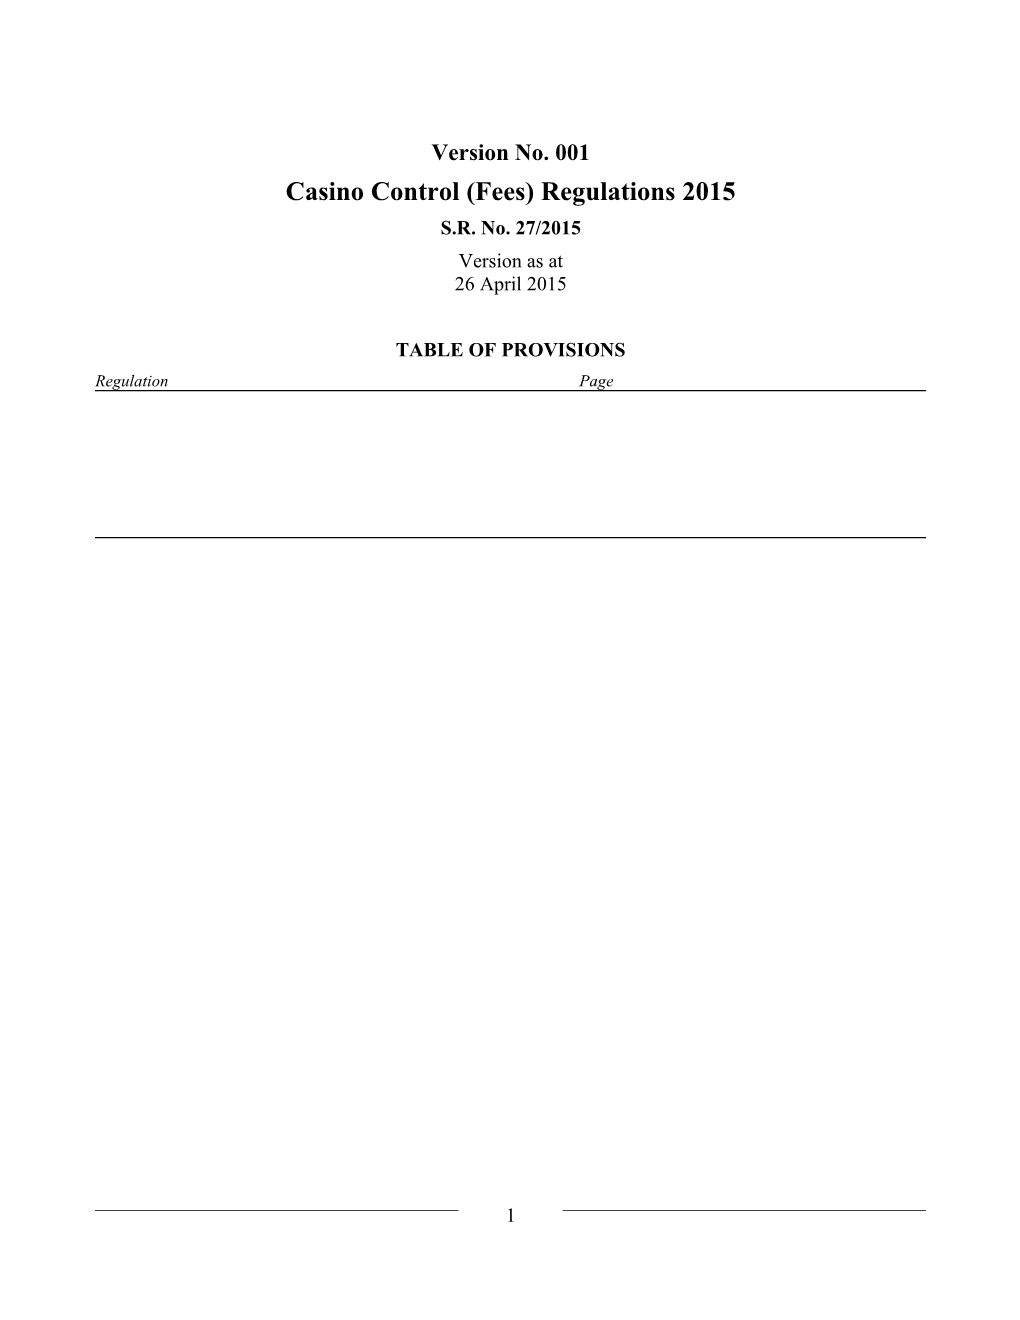 Casino Control (Fees) Regulations 2015